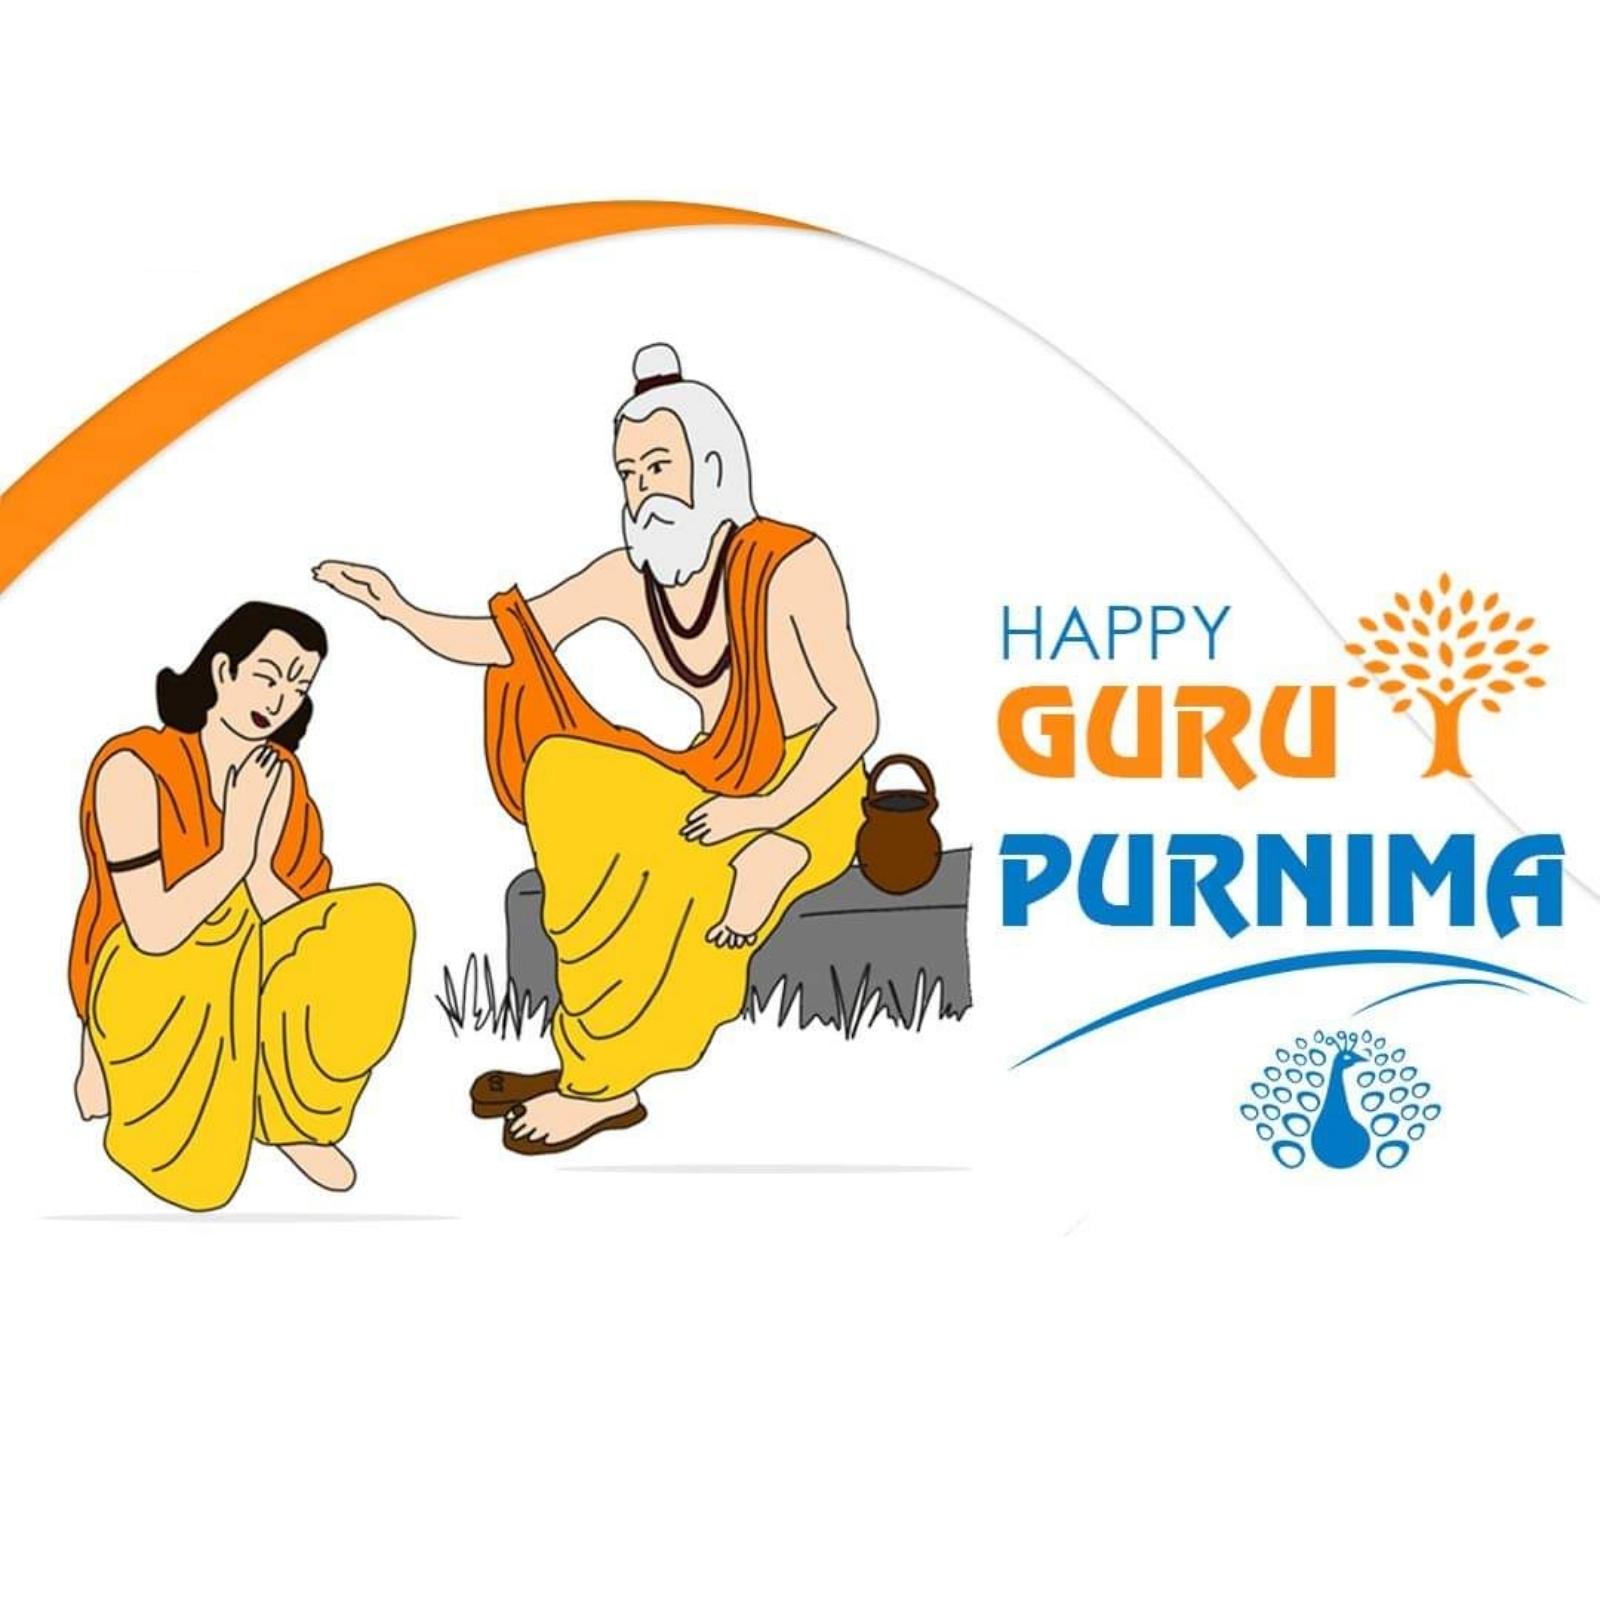 Telugu 2016 Guru Purnima Quotations Greetings Wishes with Sai baba Hd  Images | BrainyTeluguQuotes.comTelugu quotes|English quotes|Hindi  quotes|Tamil quotes|Greetings